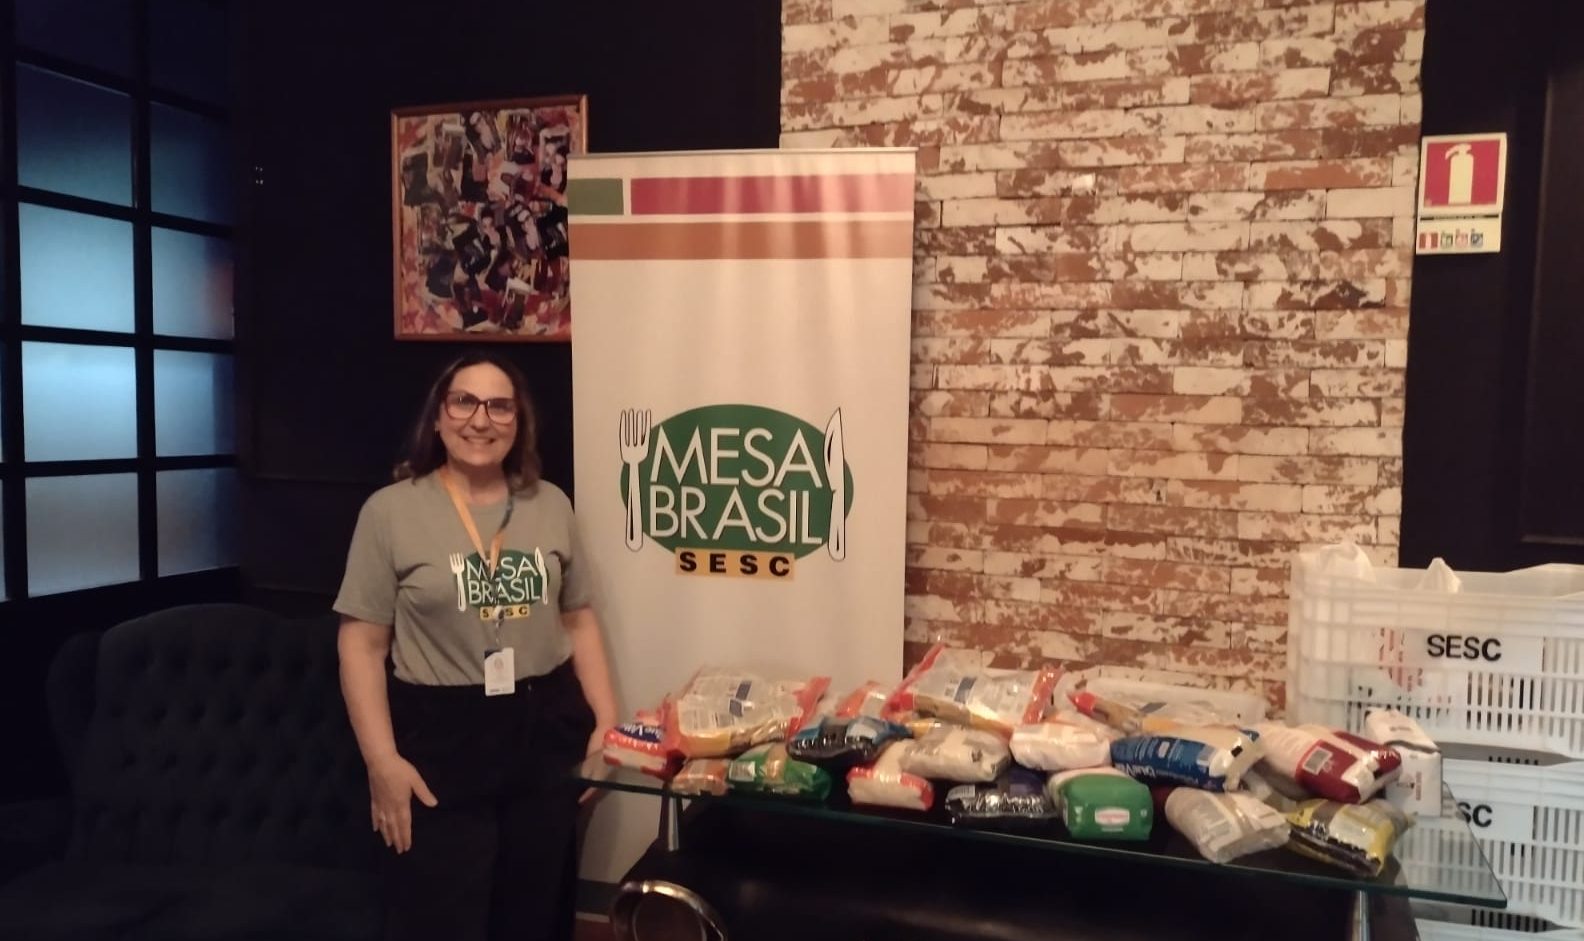 Show no Sixteen Station destina alimentos para o Sesc Mesa Brasil